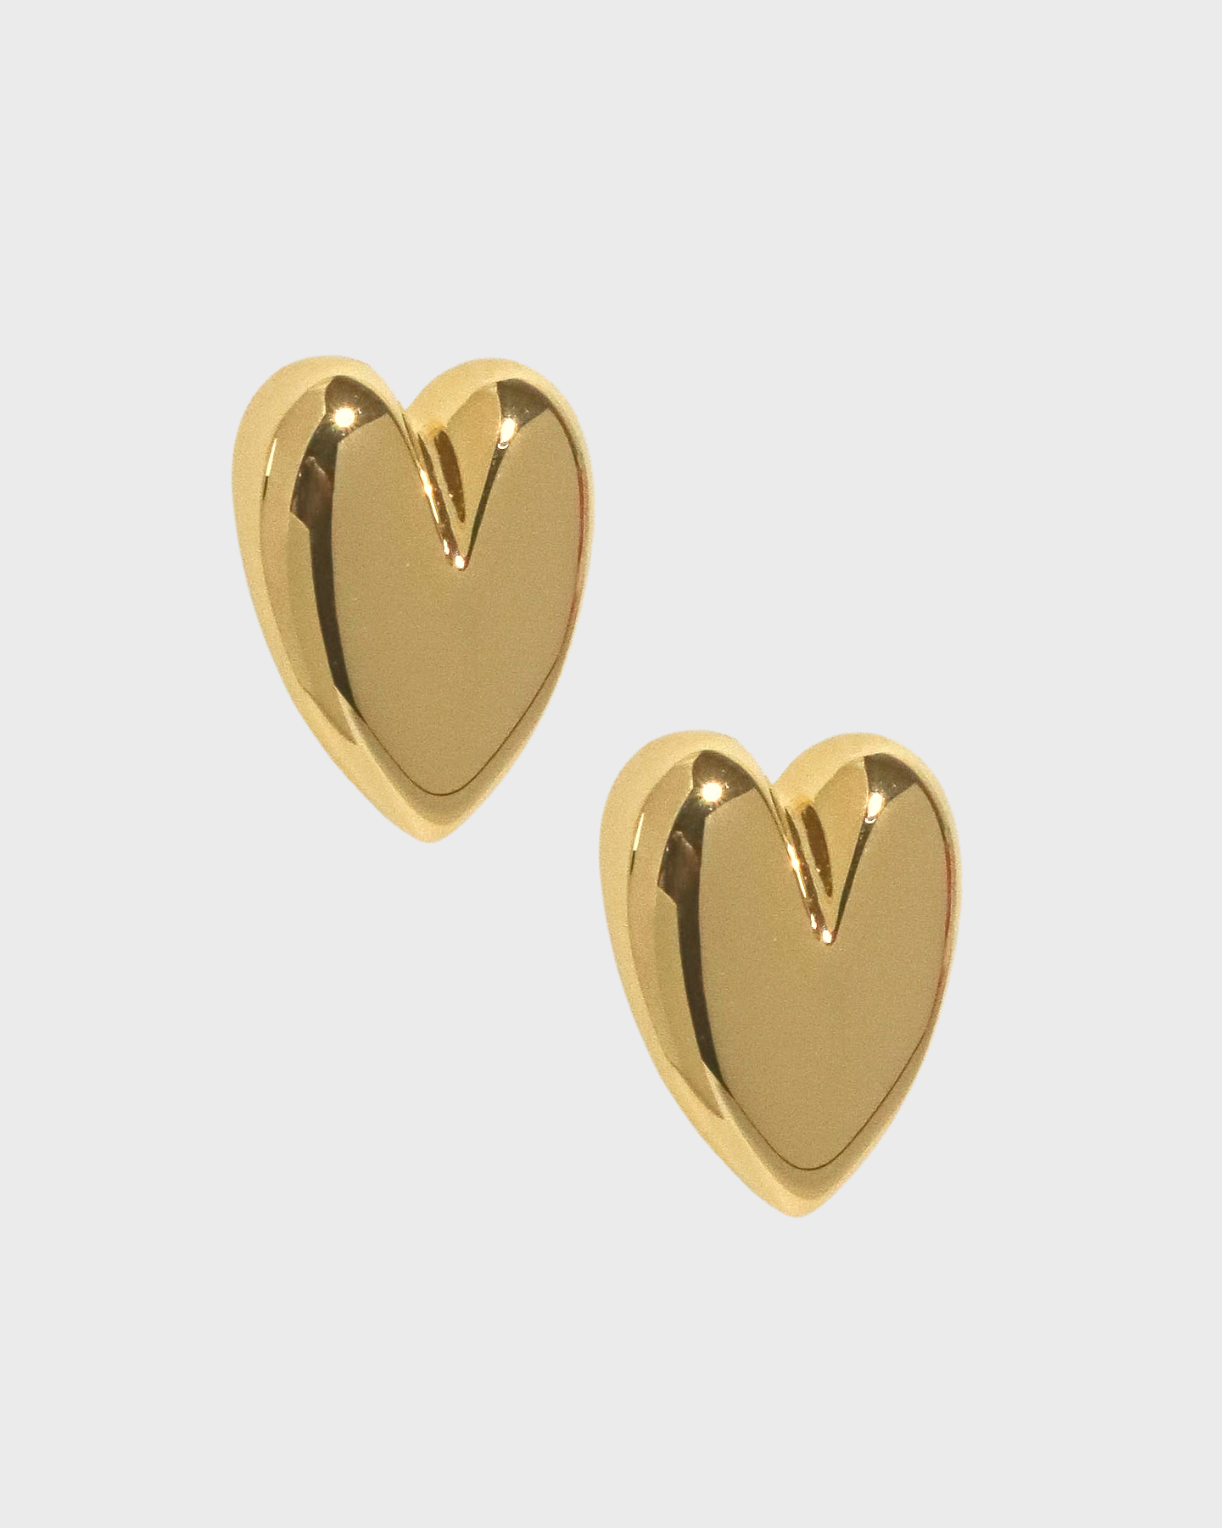 Shop Solid Gold Earrings for Women | From Kinori